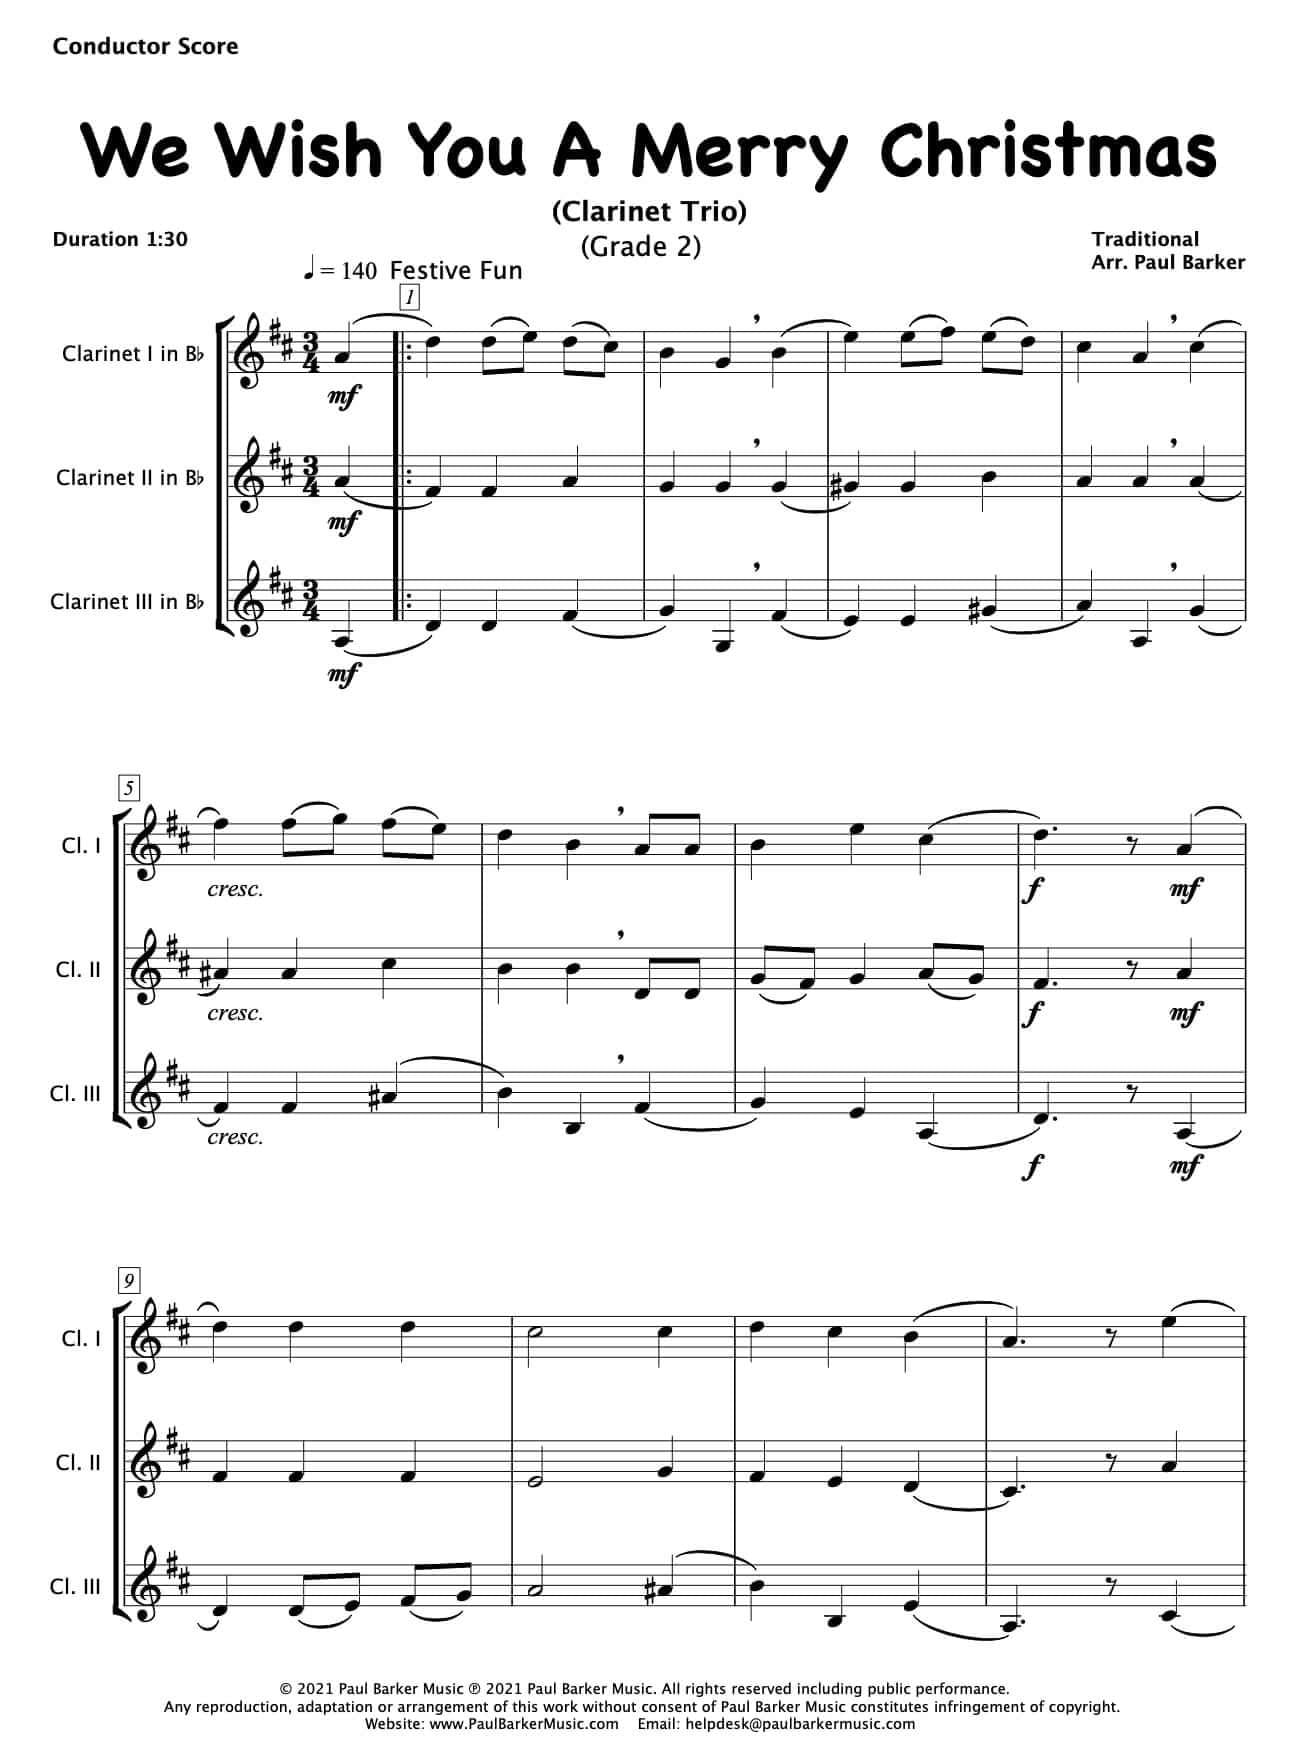 We Wish You A Merry Christmas (Clarinet Trio) - Paul Barker Music 